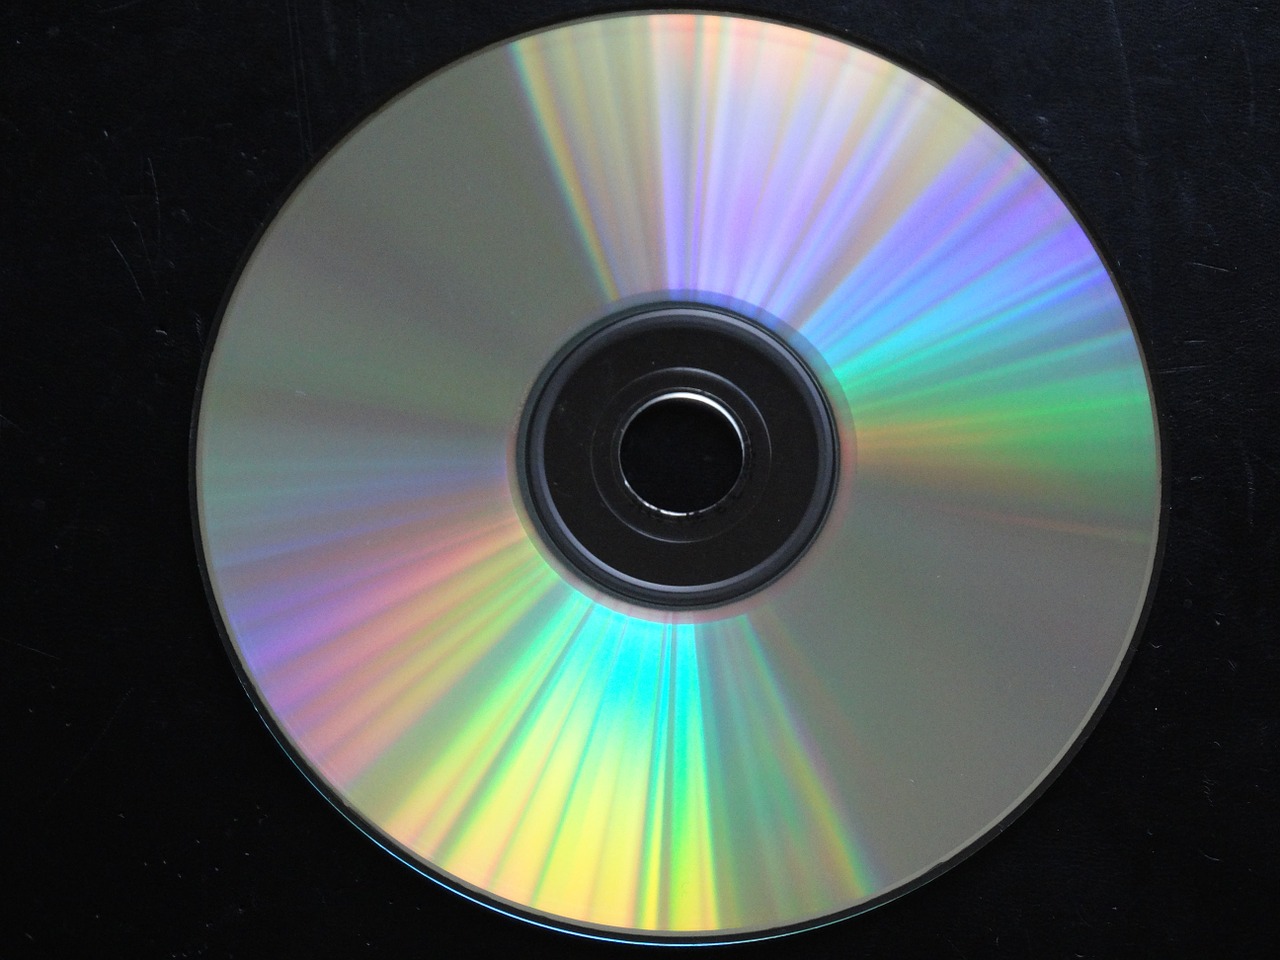 cd dvd floppy disk free photo